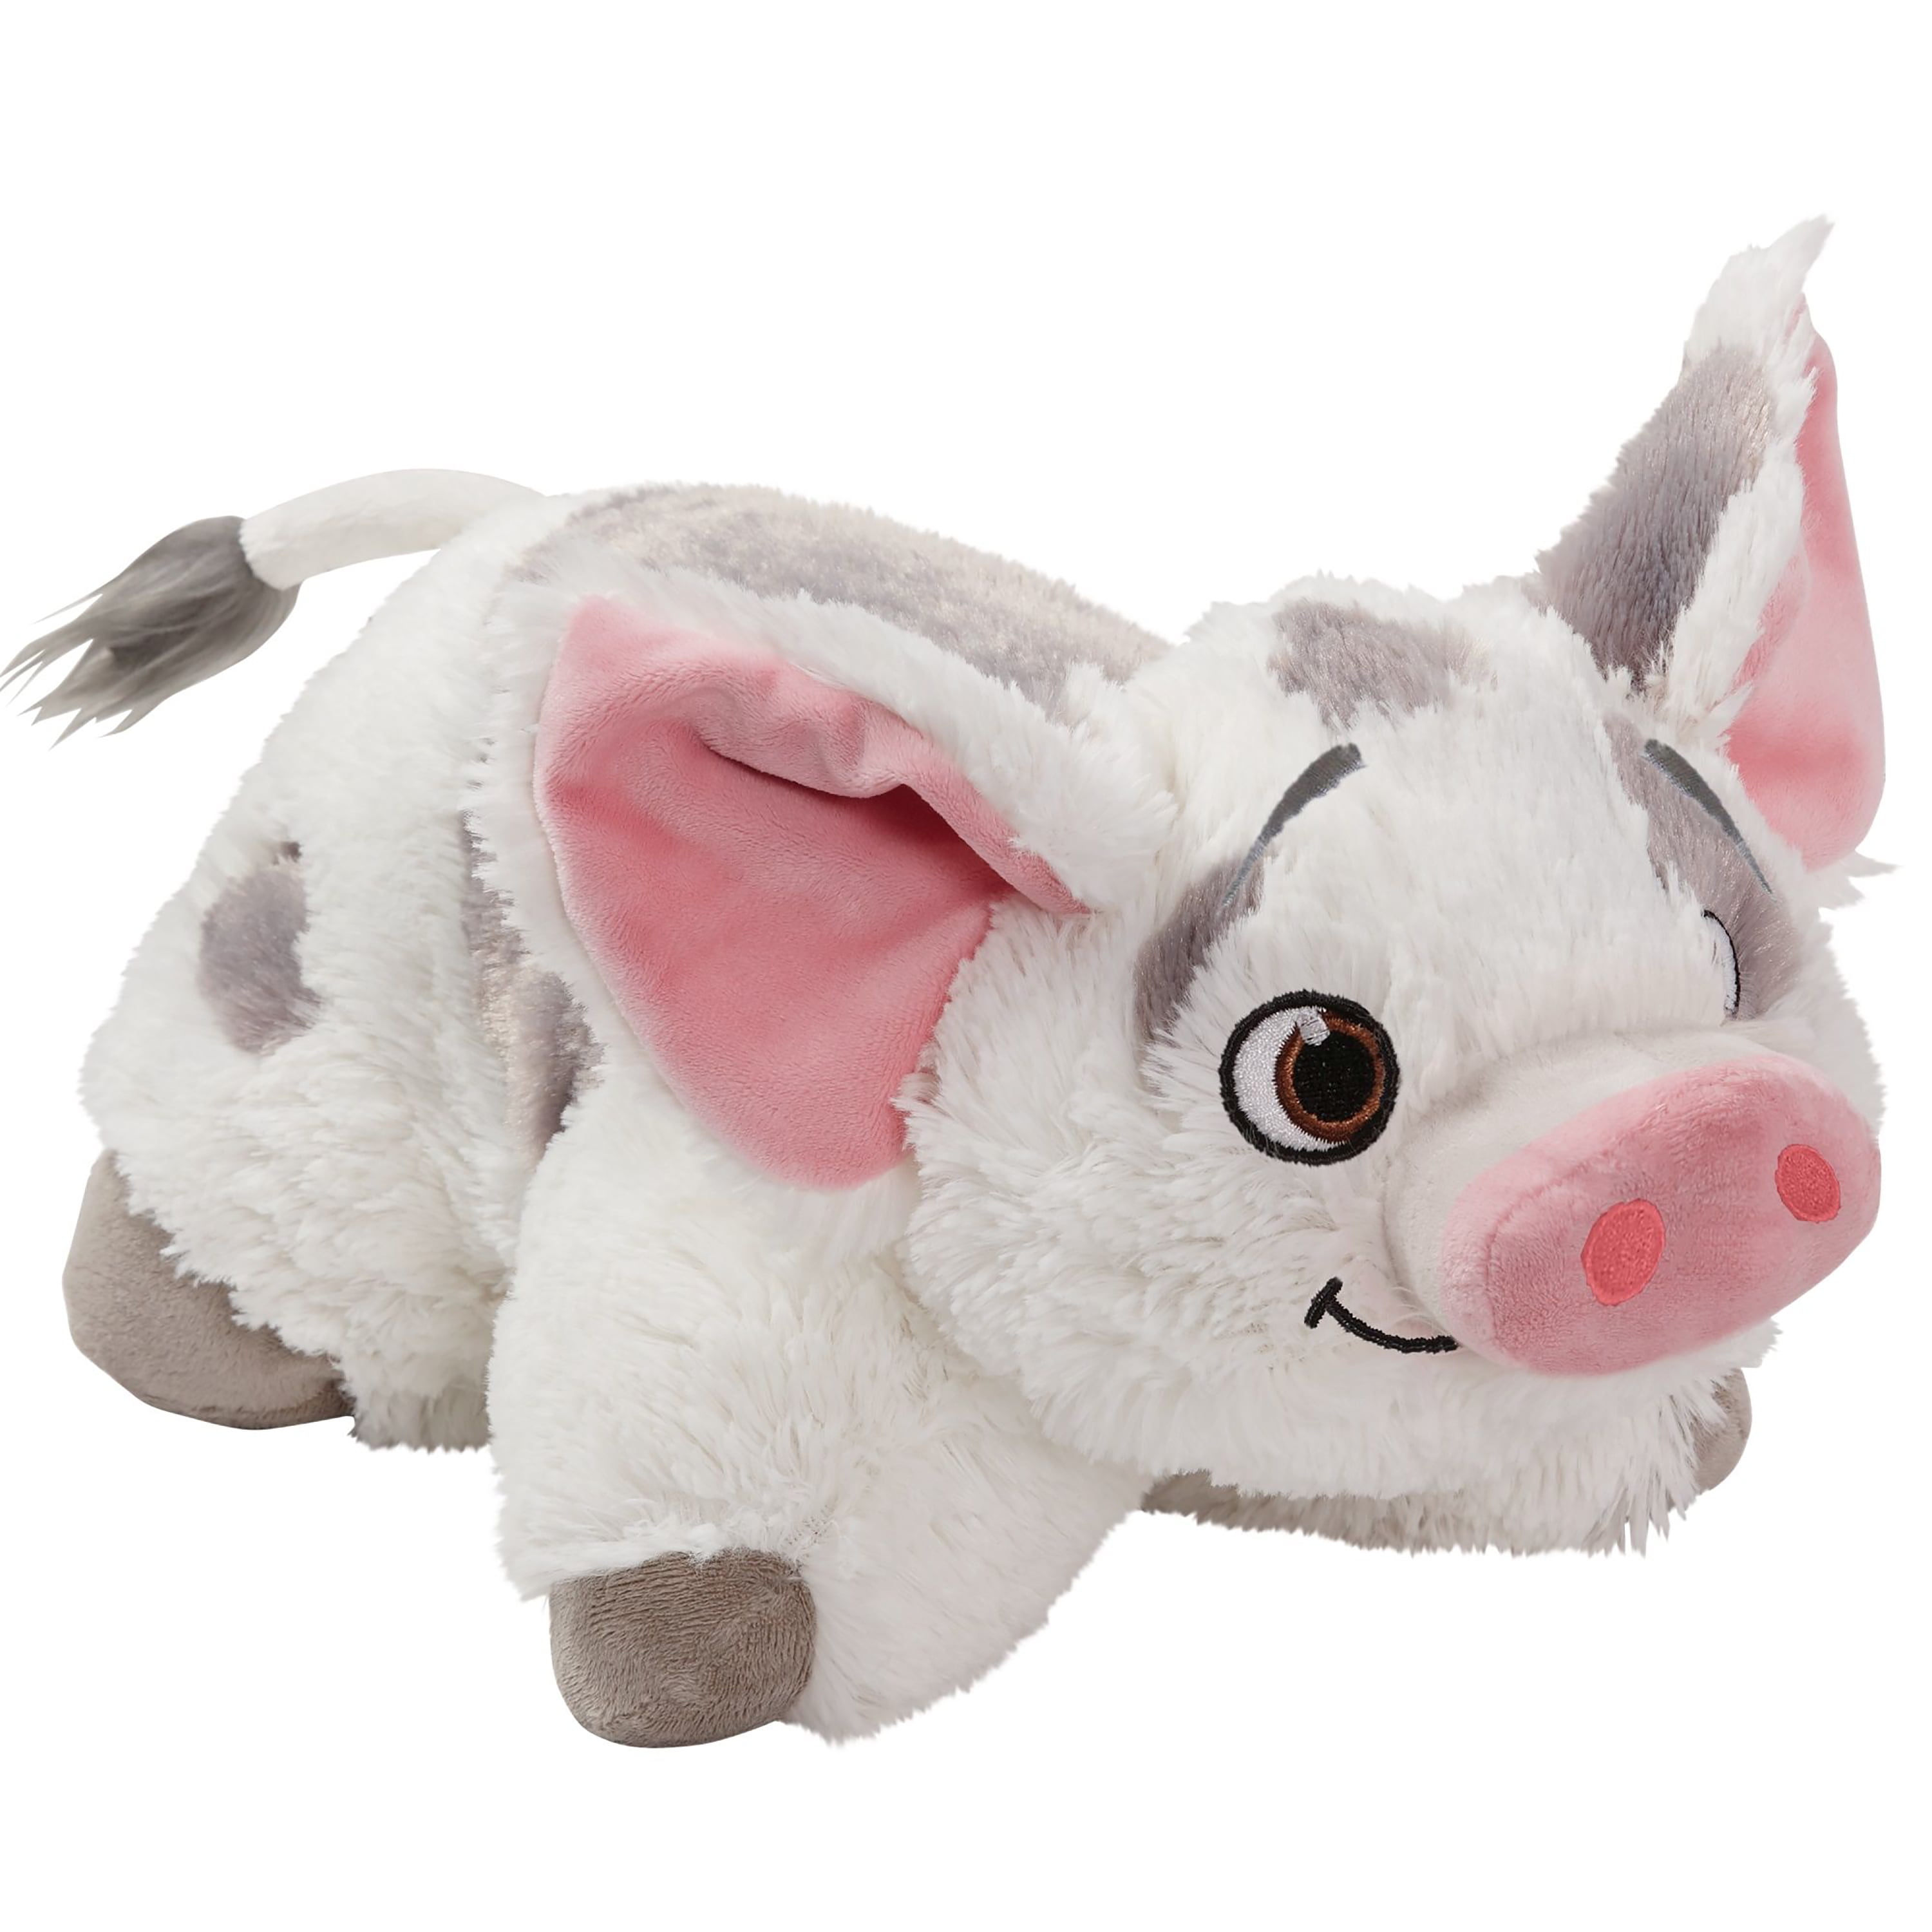 0rigina Lpillow Pets Stuffed Animal Plush Disney 16" Eeyore for sale online 